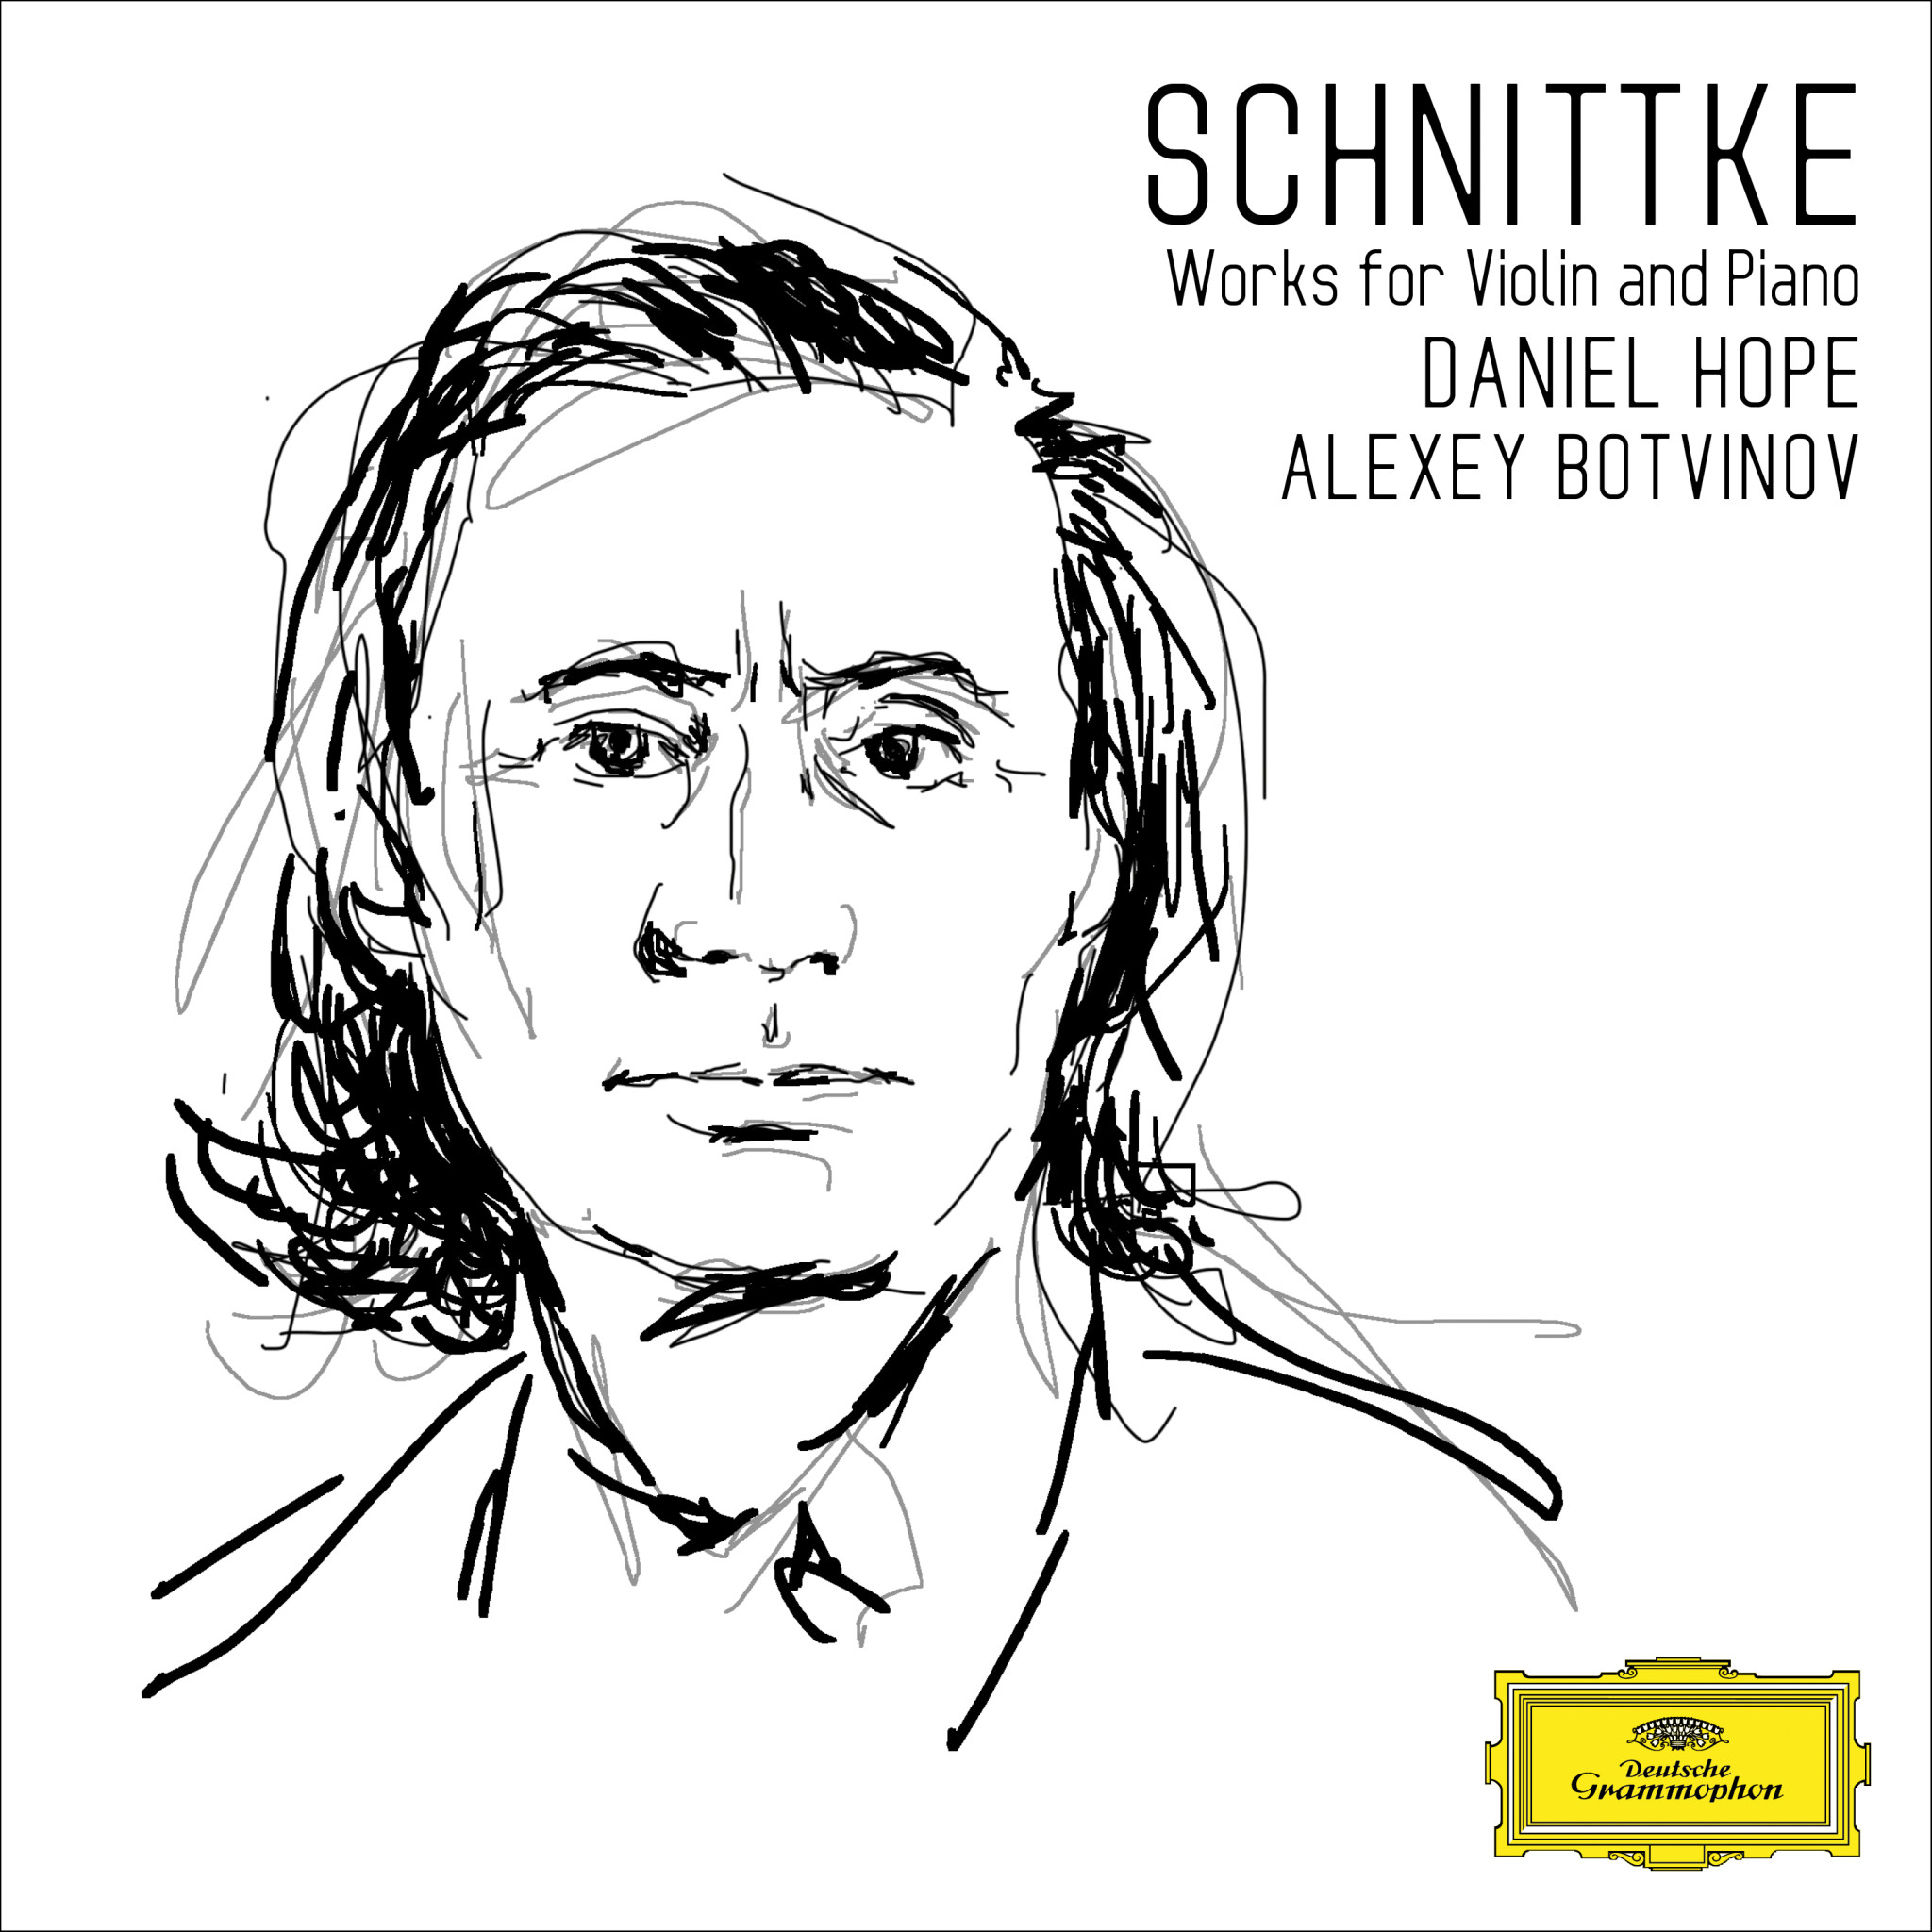 Schnittke: Works for Violin and Piano - Daniel Hope, Alexey Botvinov